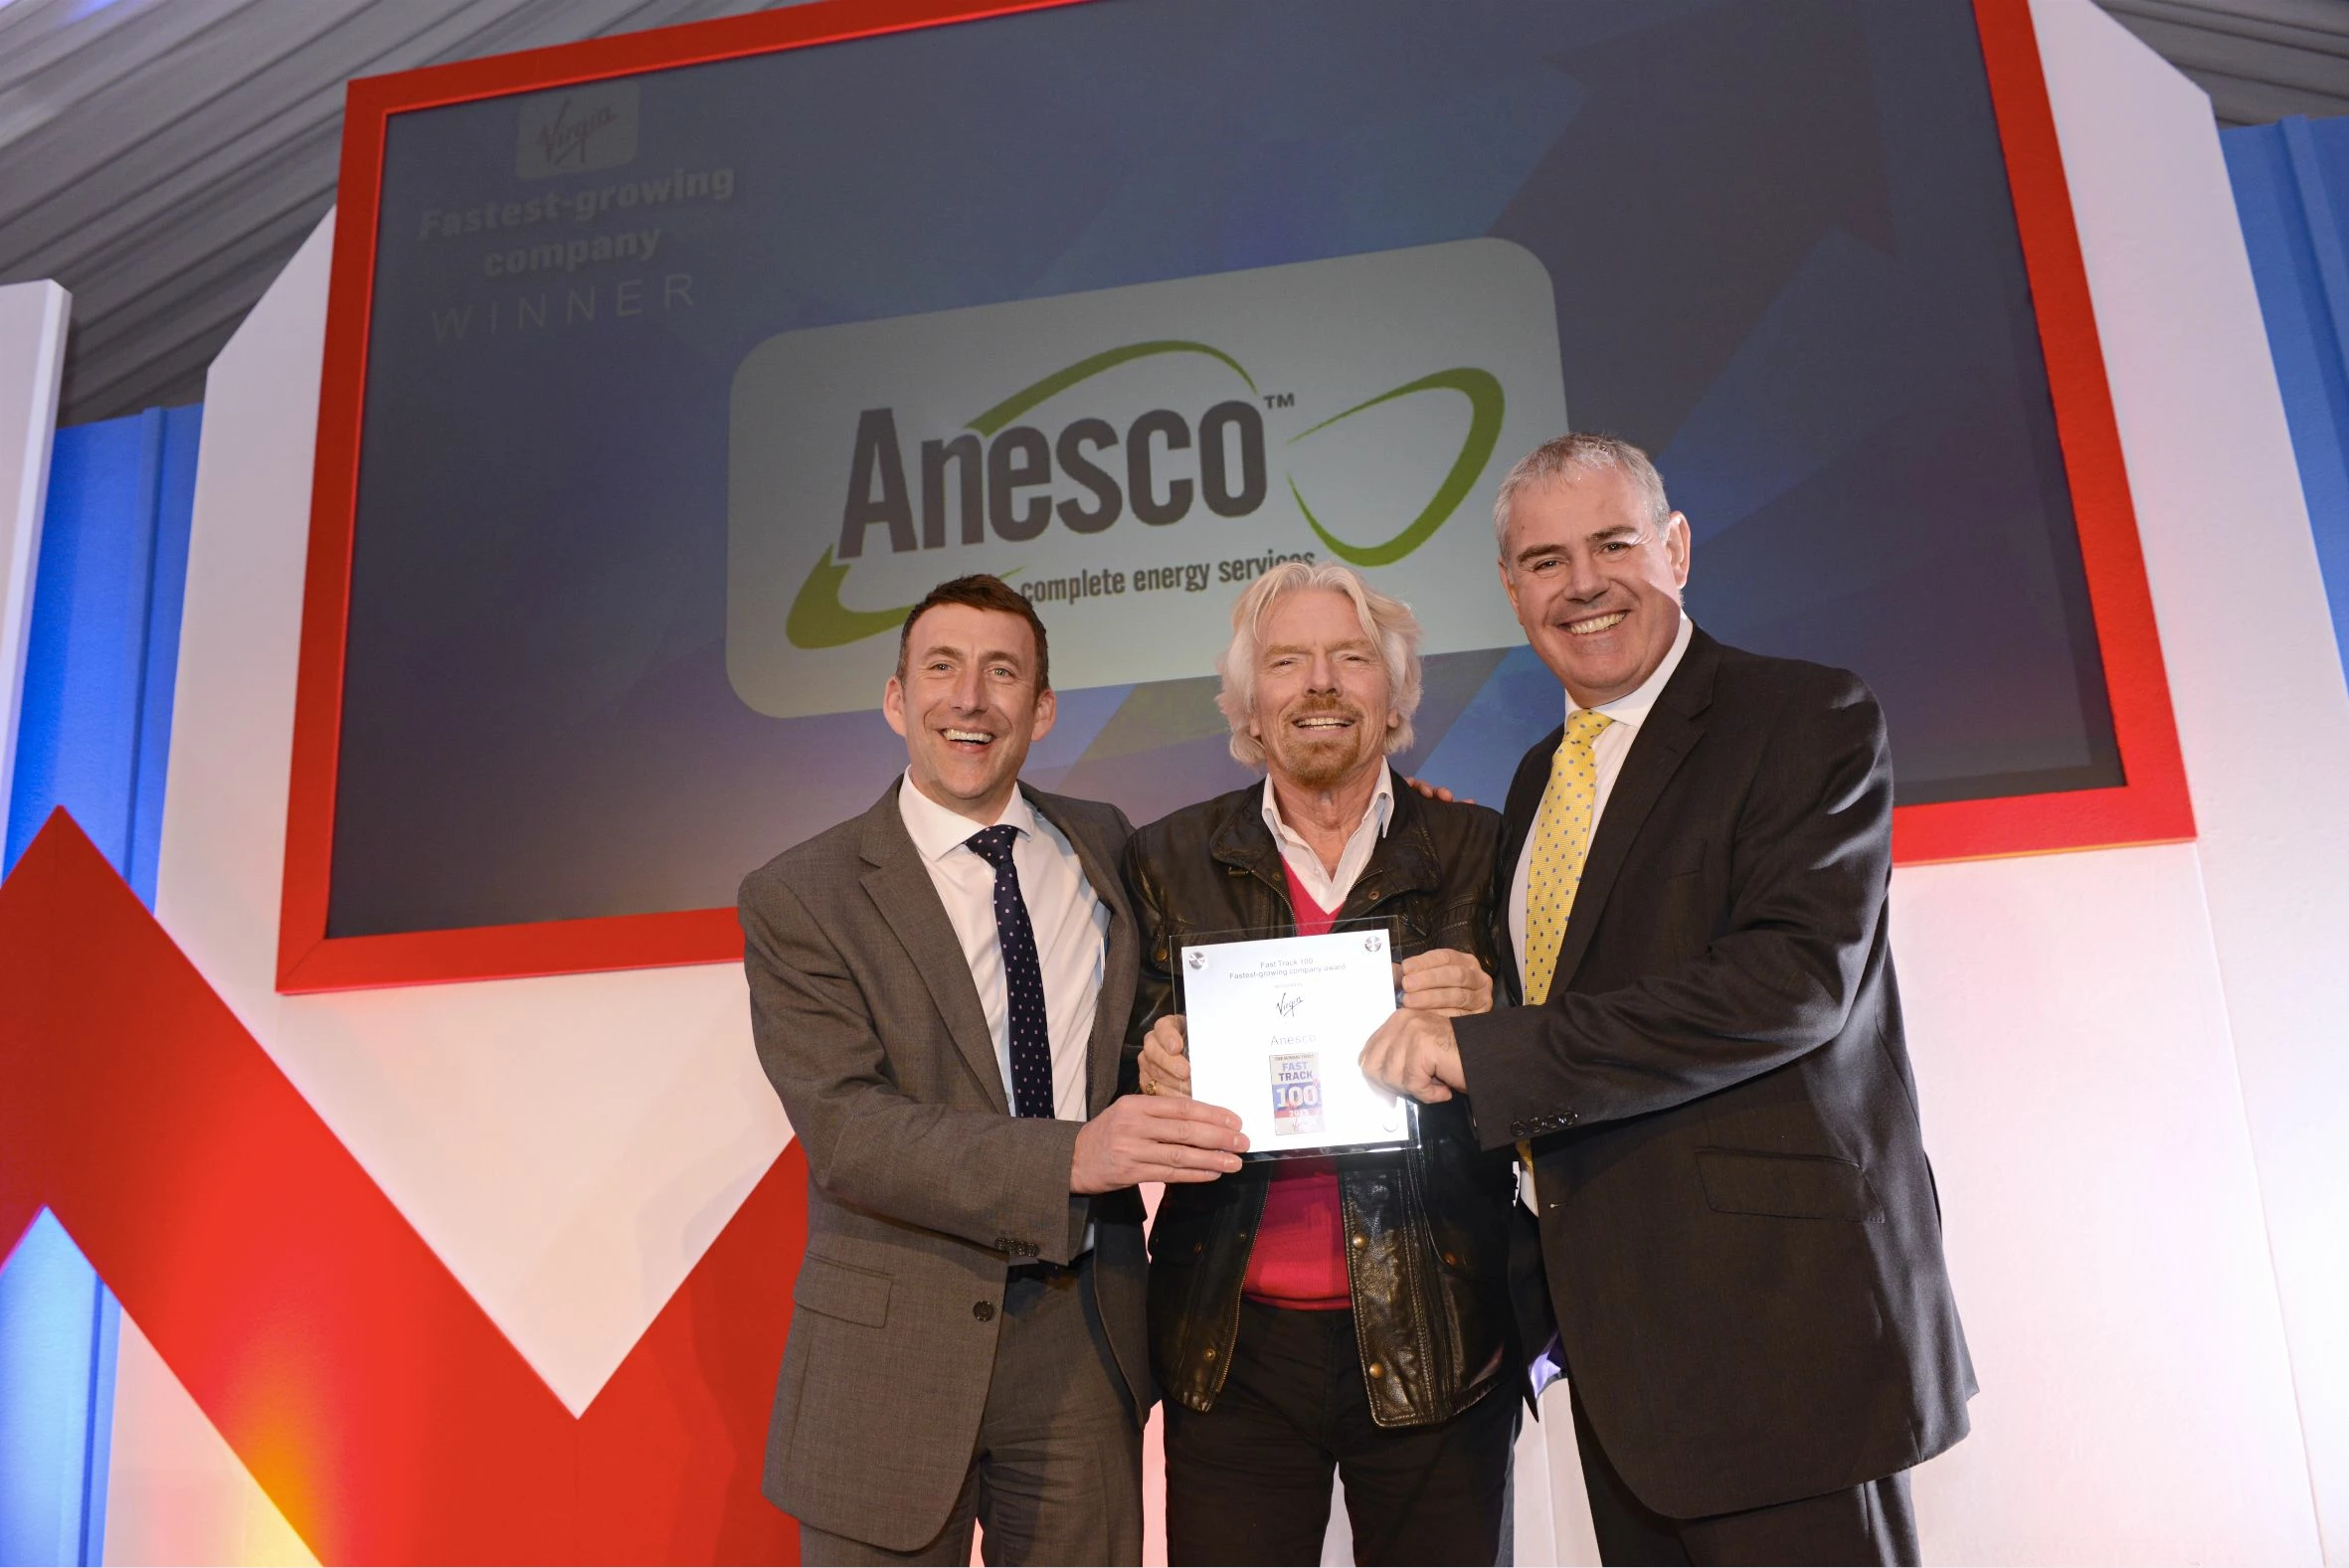 Richard Branson presents award to Anesco